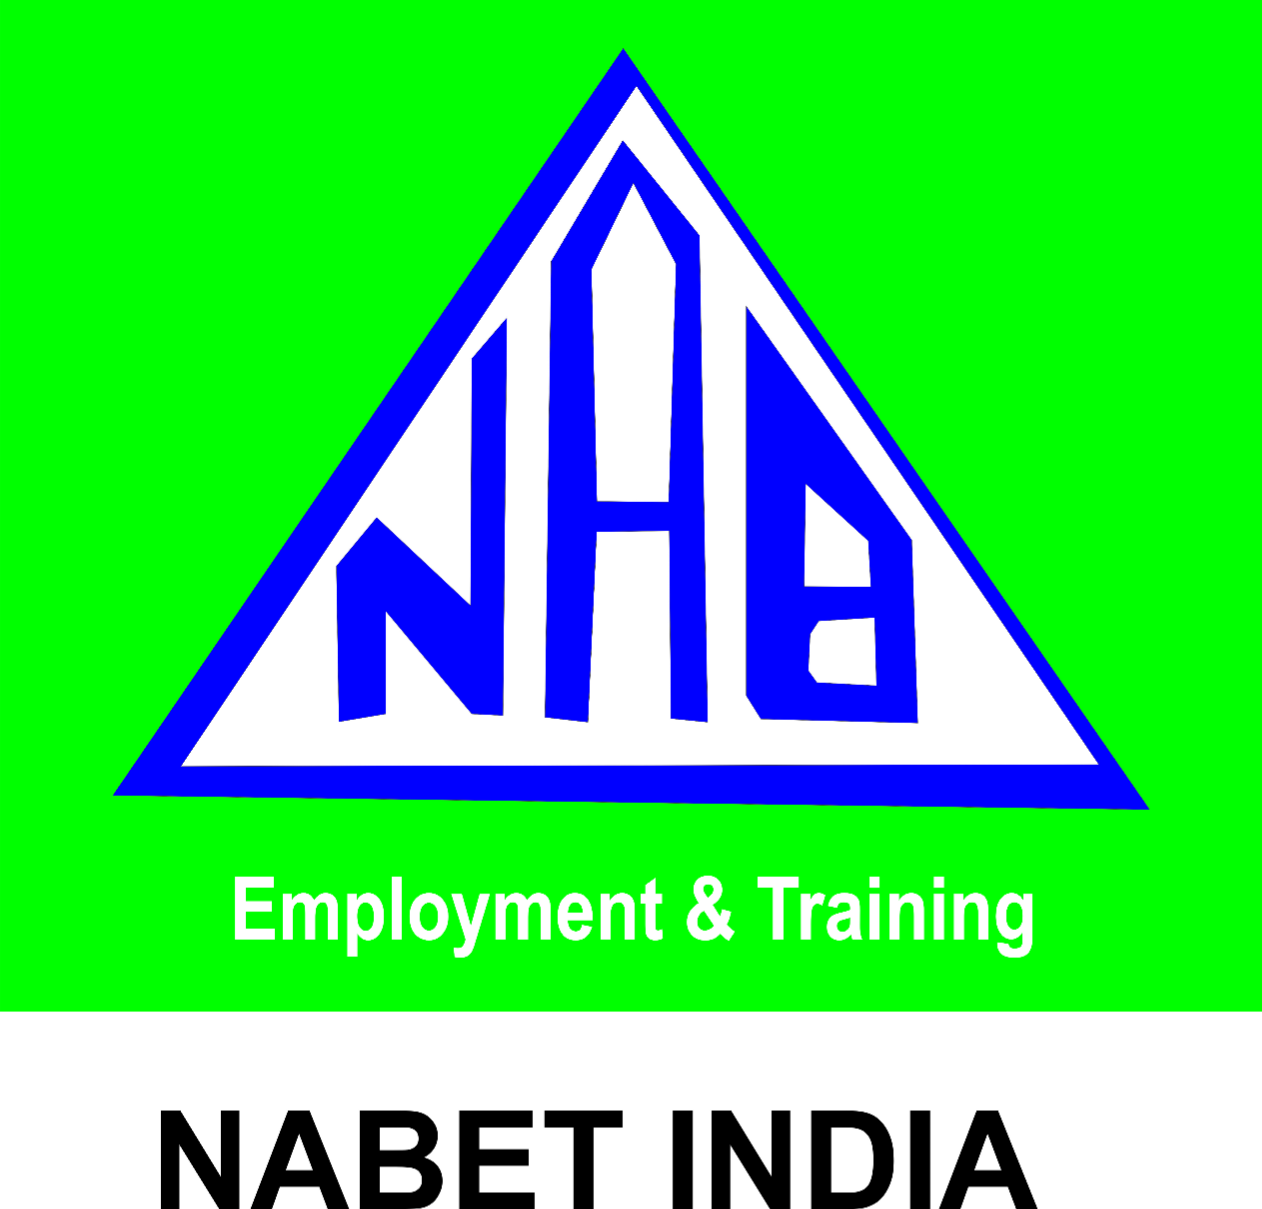 National Association for the Blind (Employment & Training), Manesar